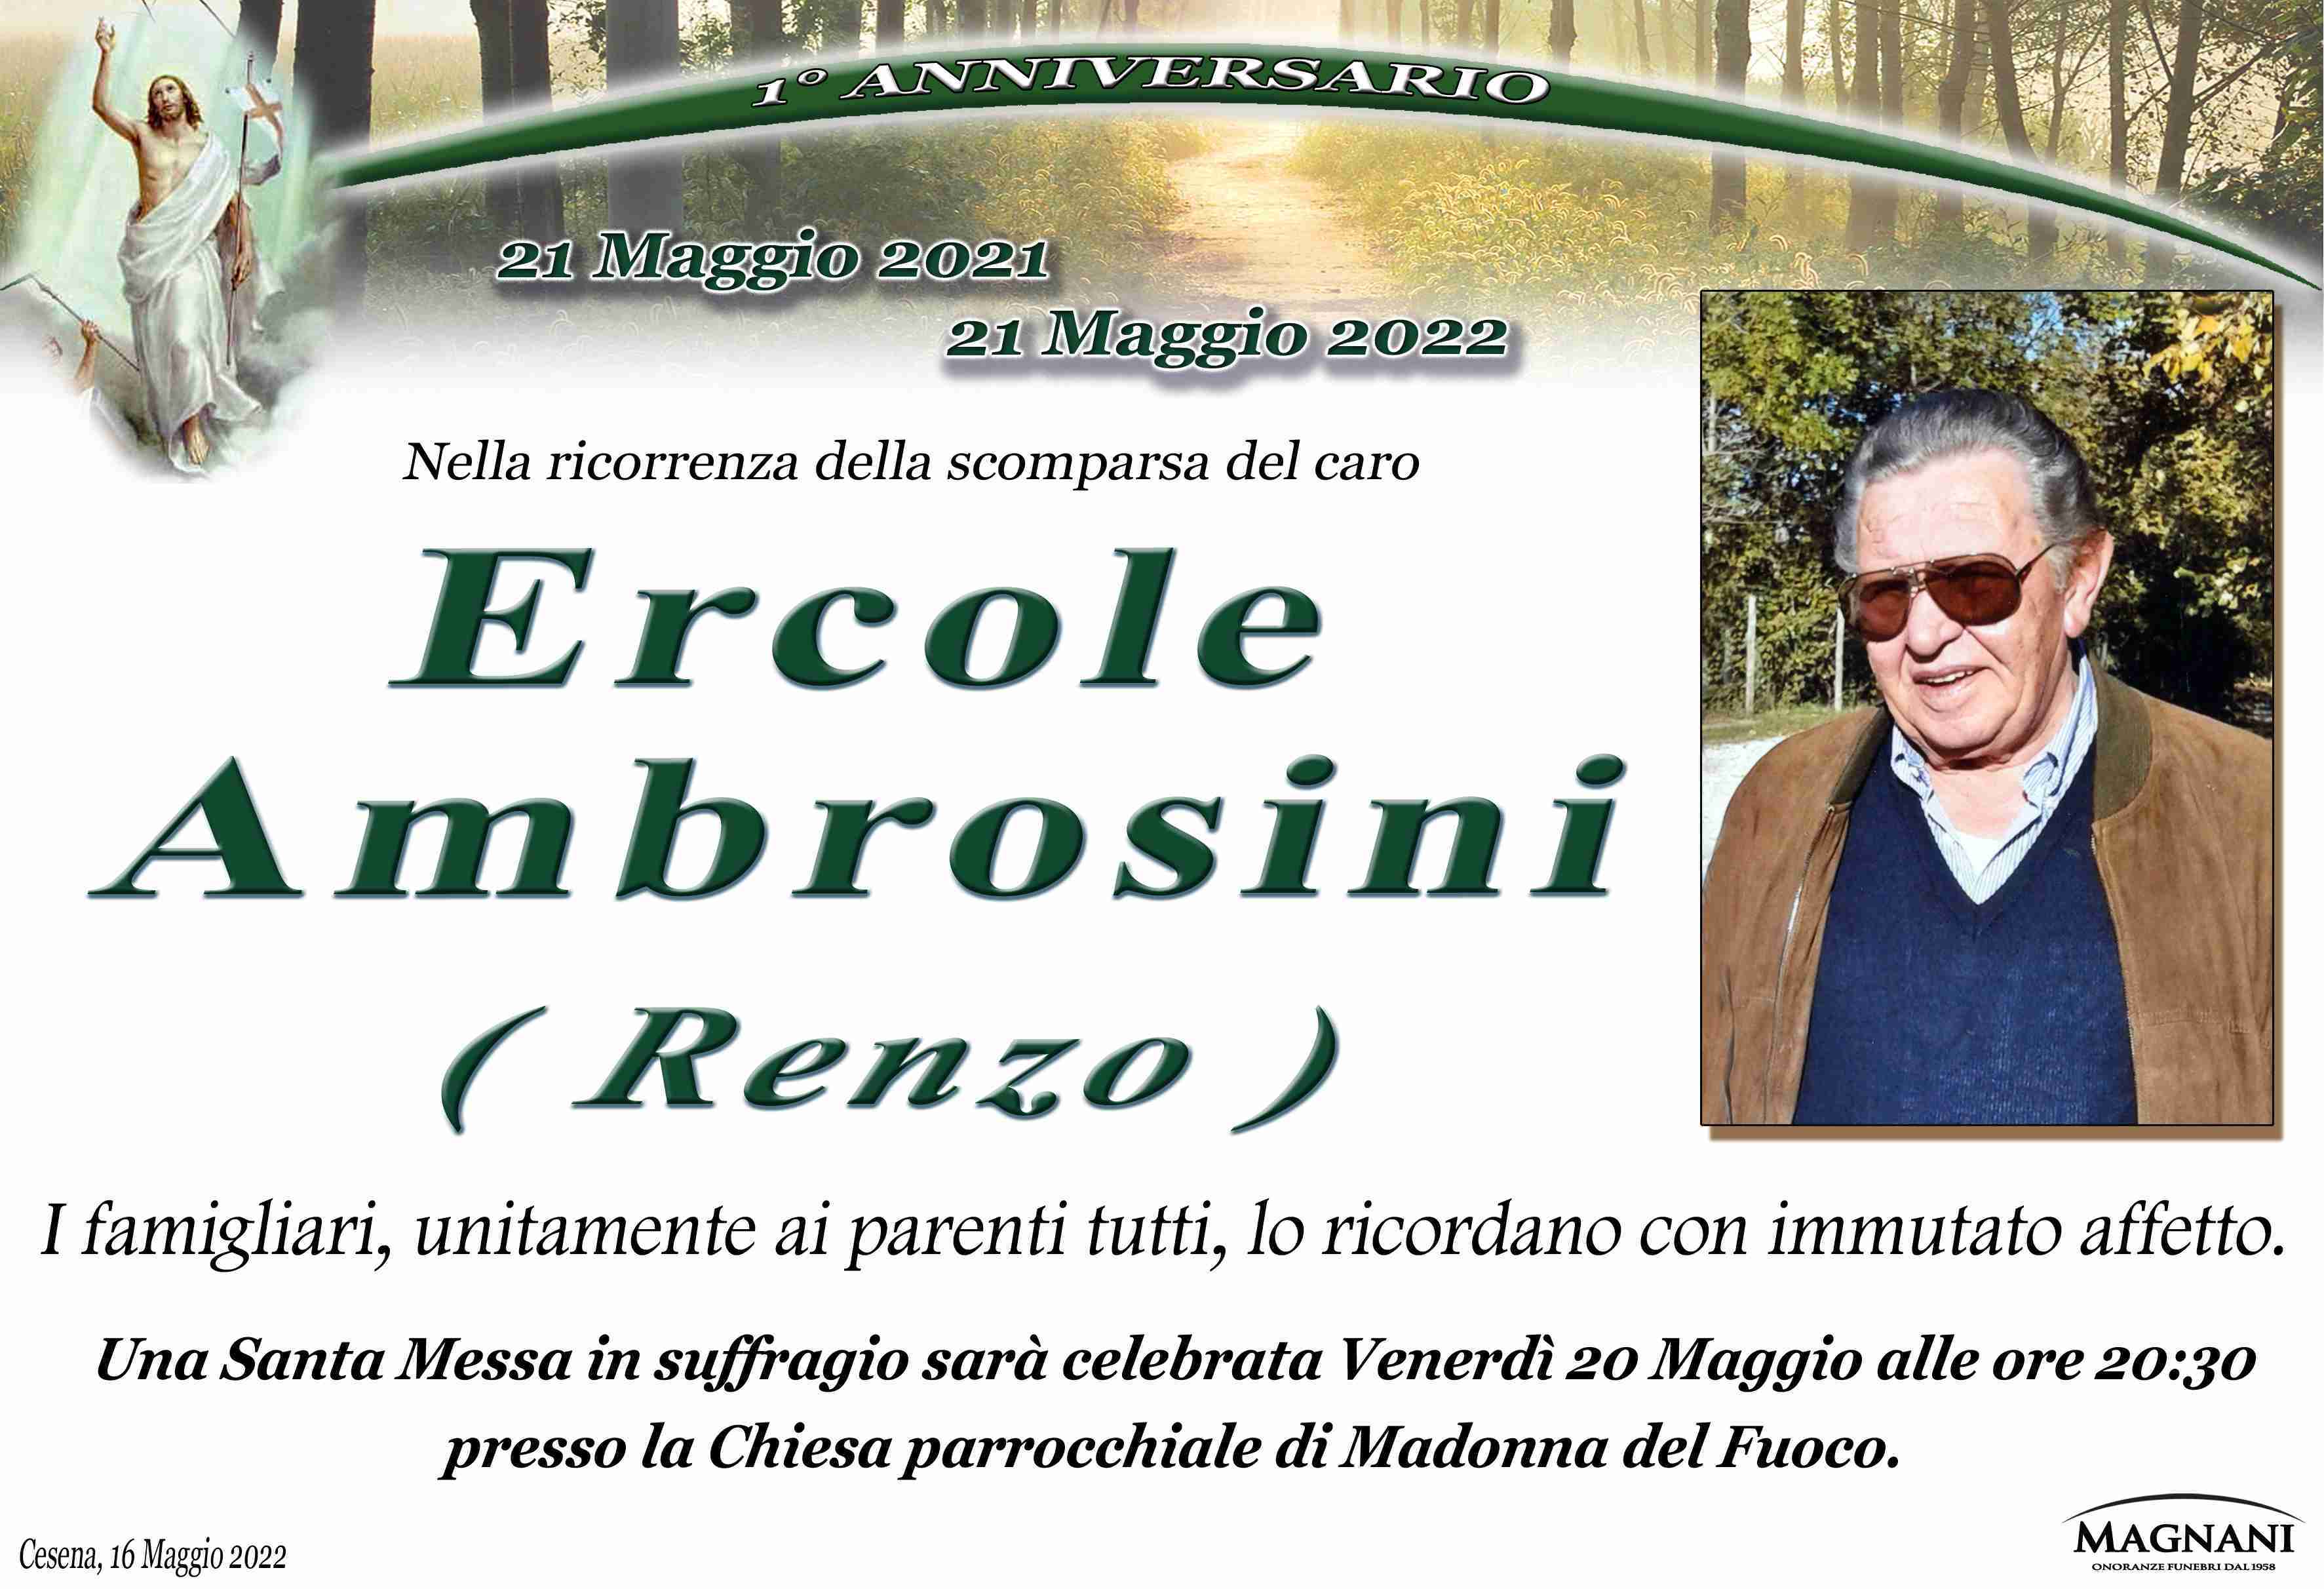 Ercole Ambrosini